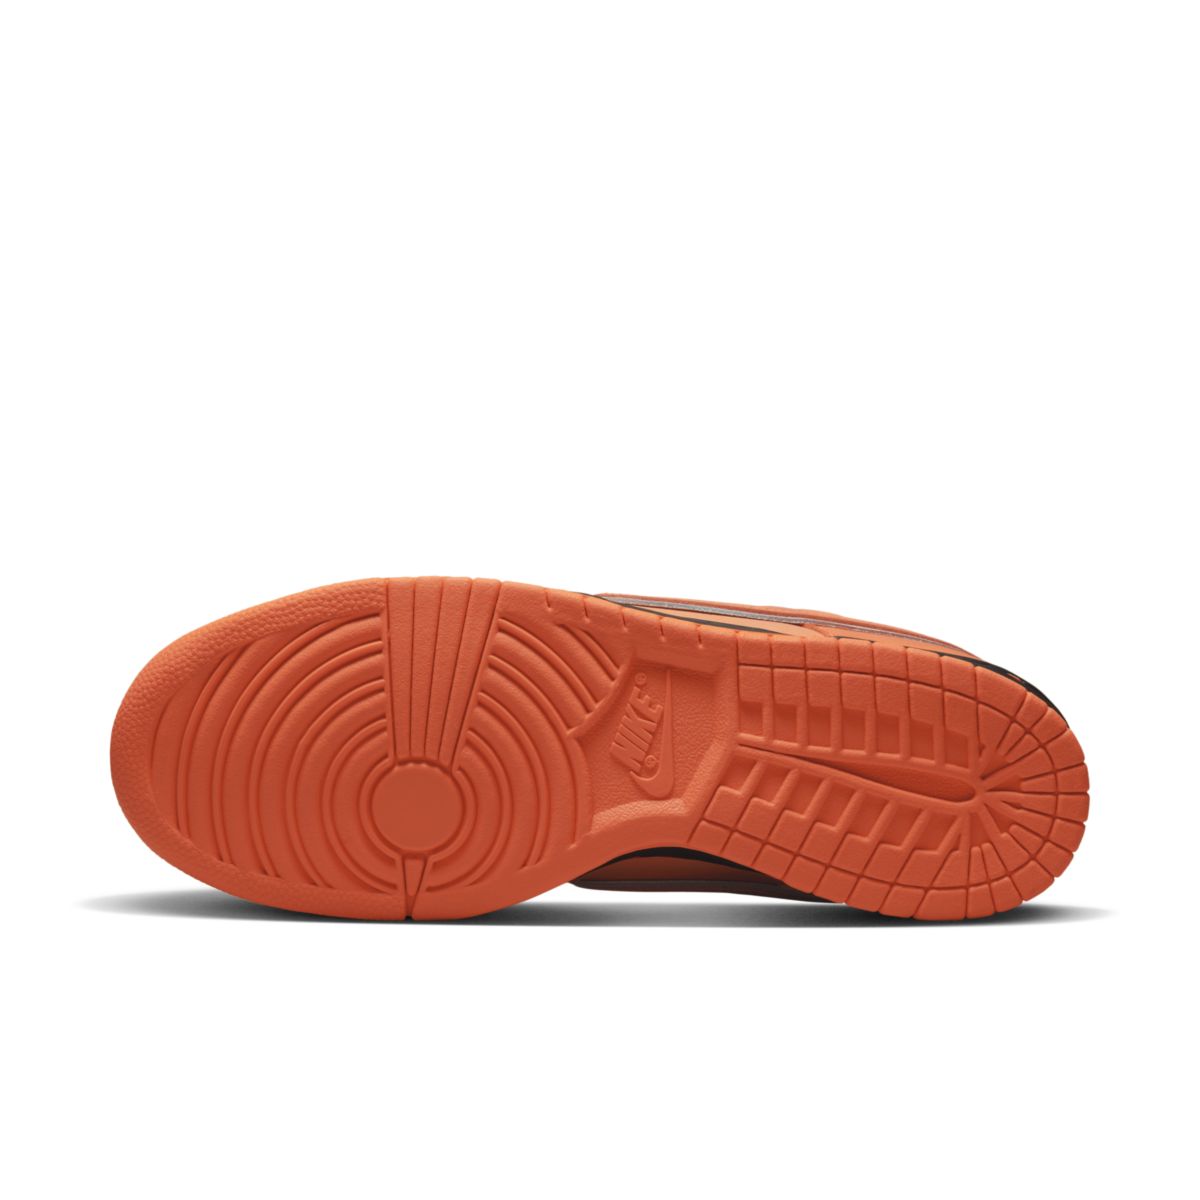 Concepts x Nike SB Dunk Low Orange Lobster FD8776-800 1